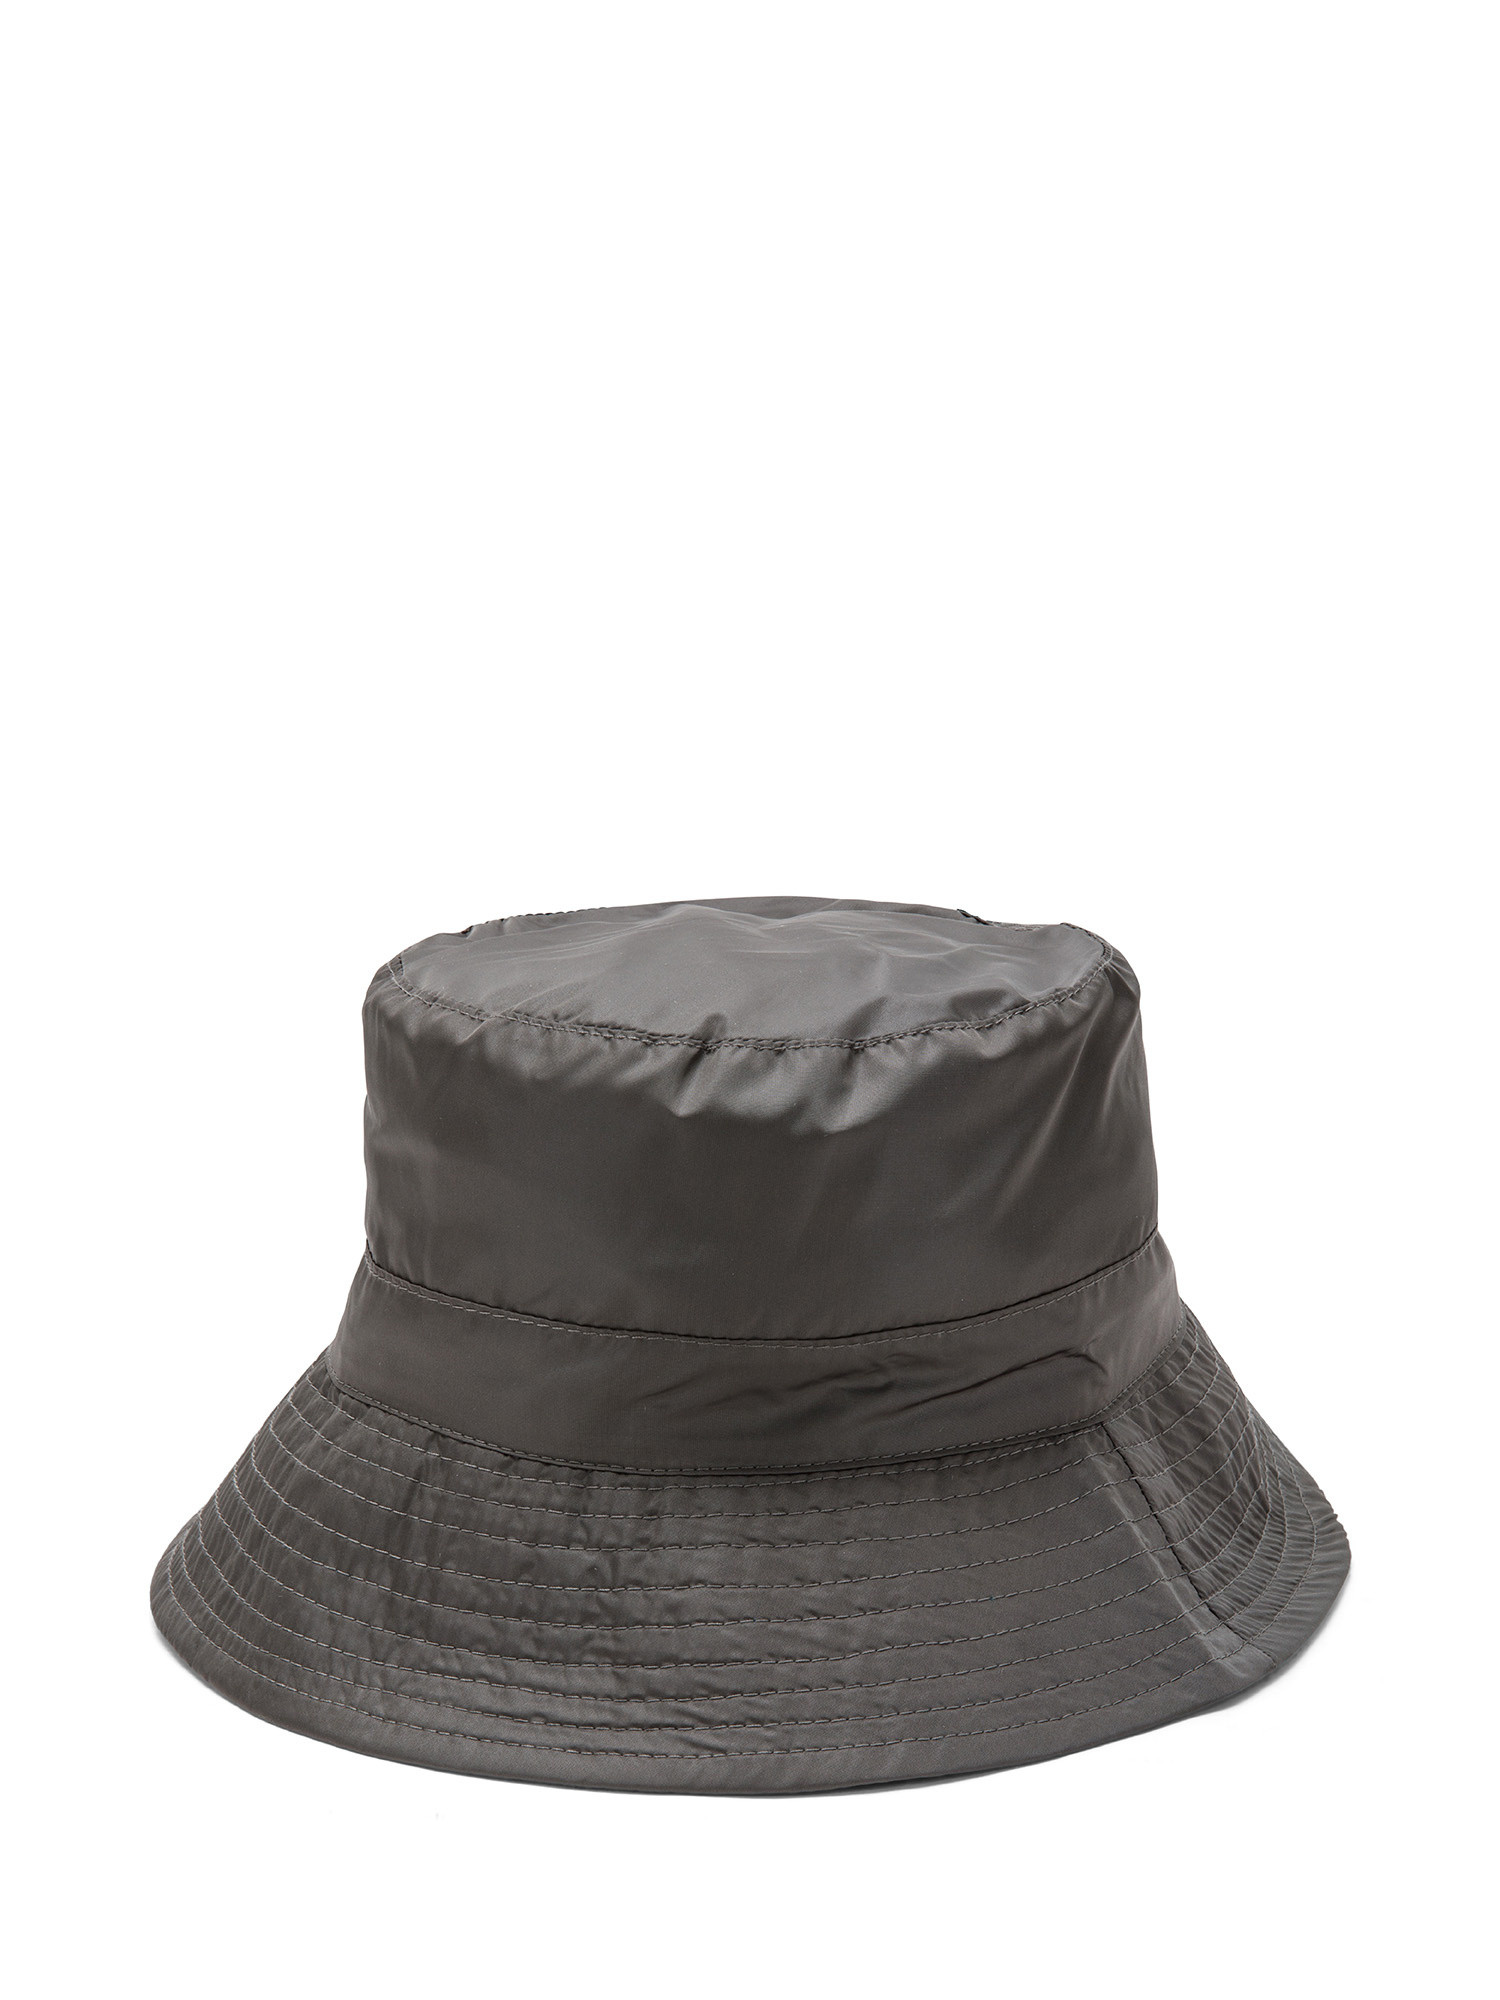 Koan - Cappello in nylon, Grigio scuro, large image number 0